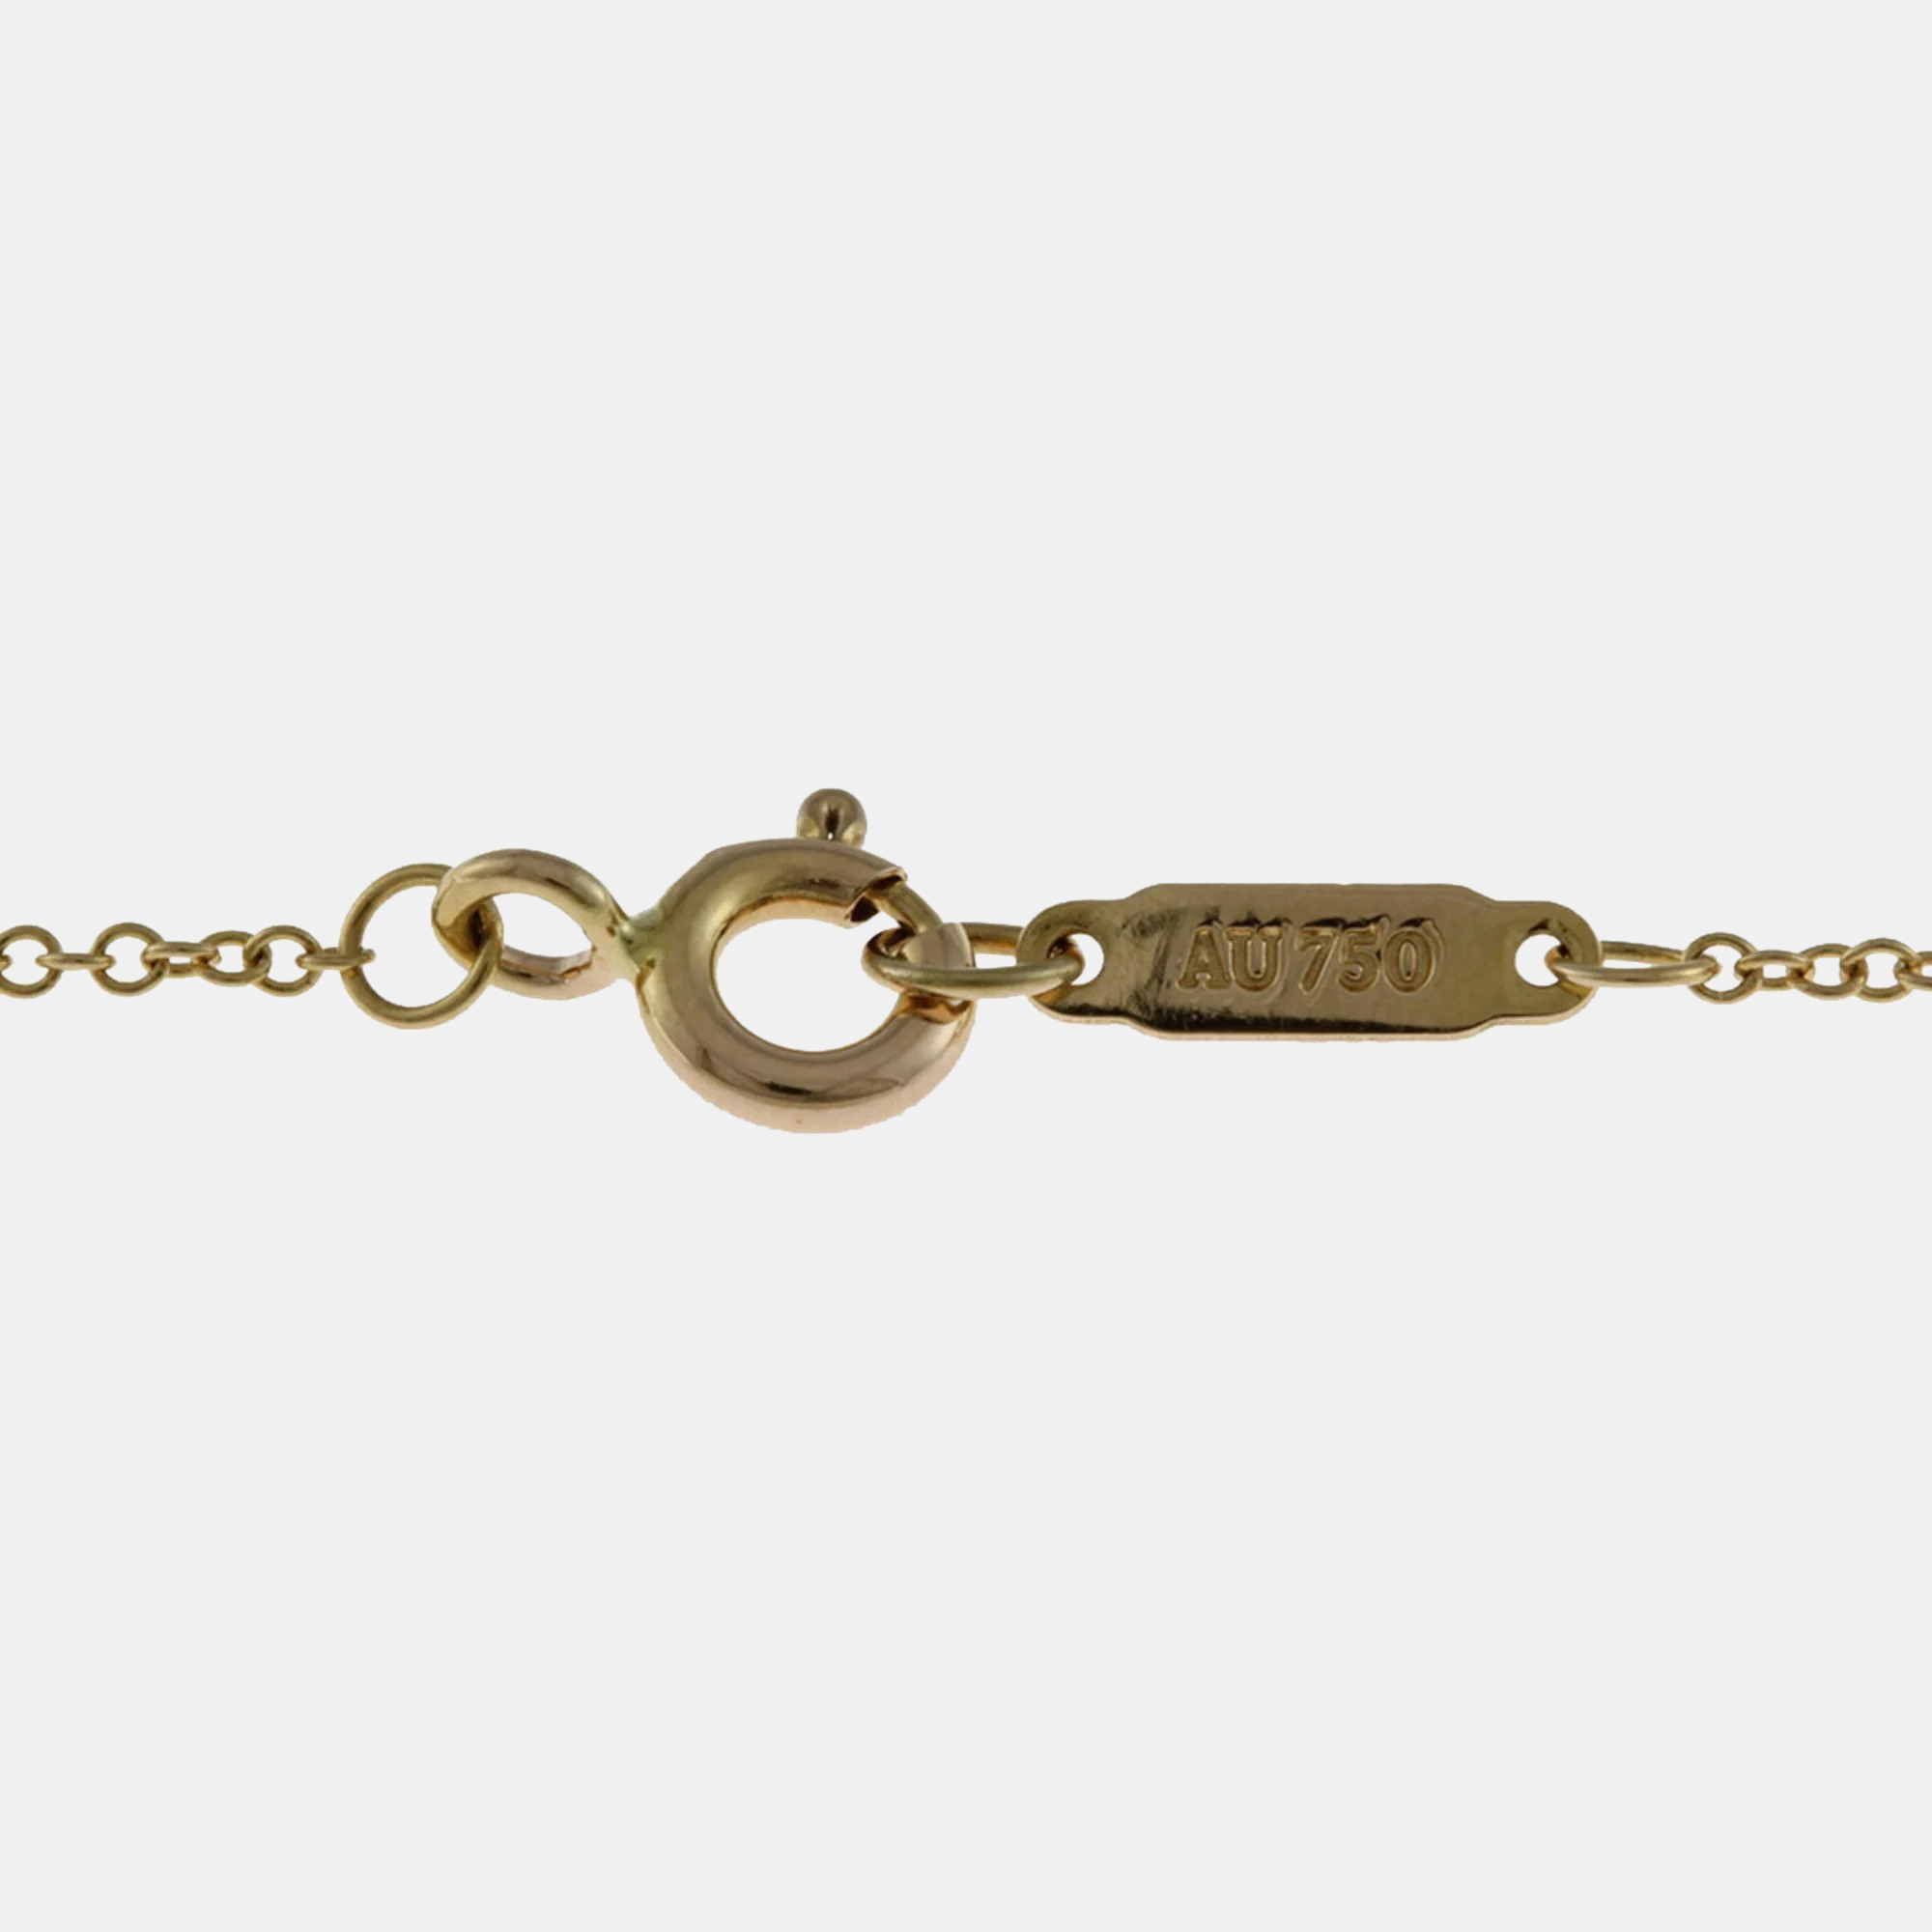 Tiffany & Co. 18K Rose Gold And Diamond Sentimental Heart Pendant Necklace